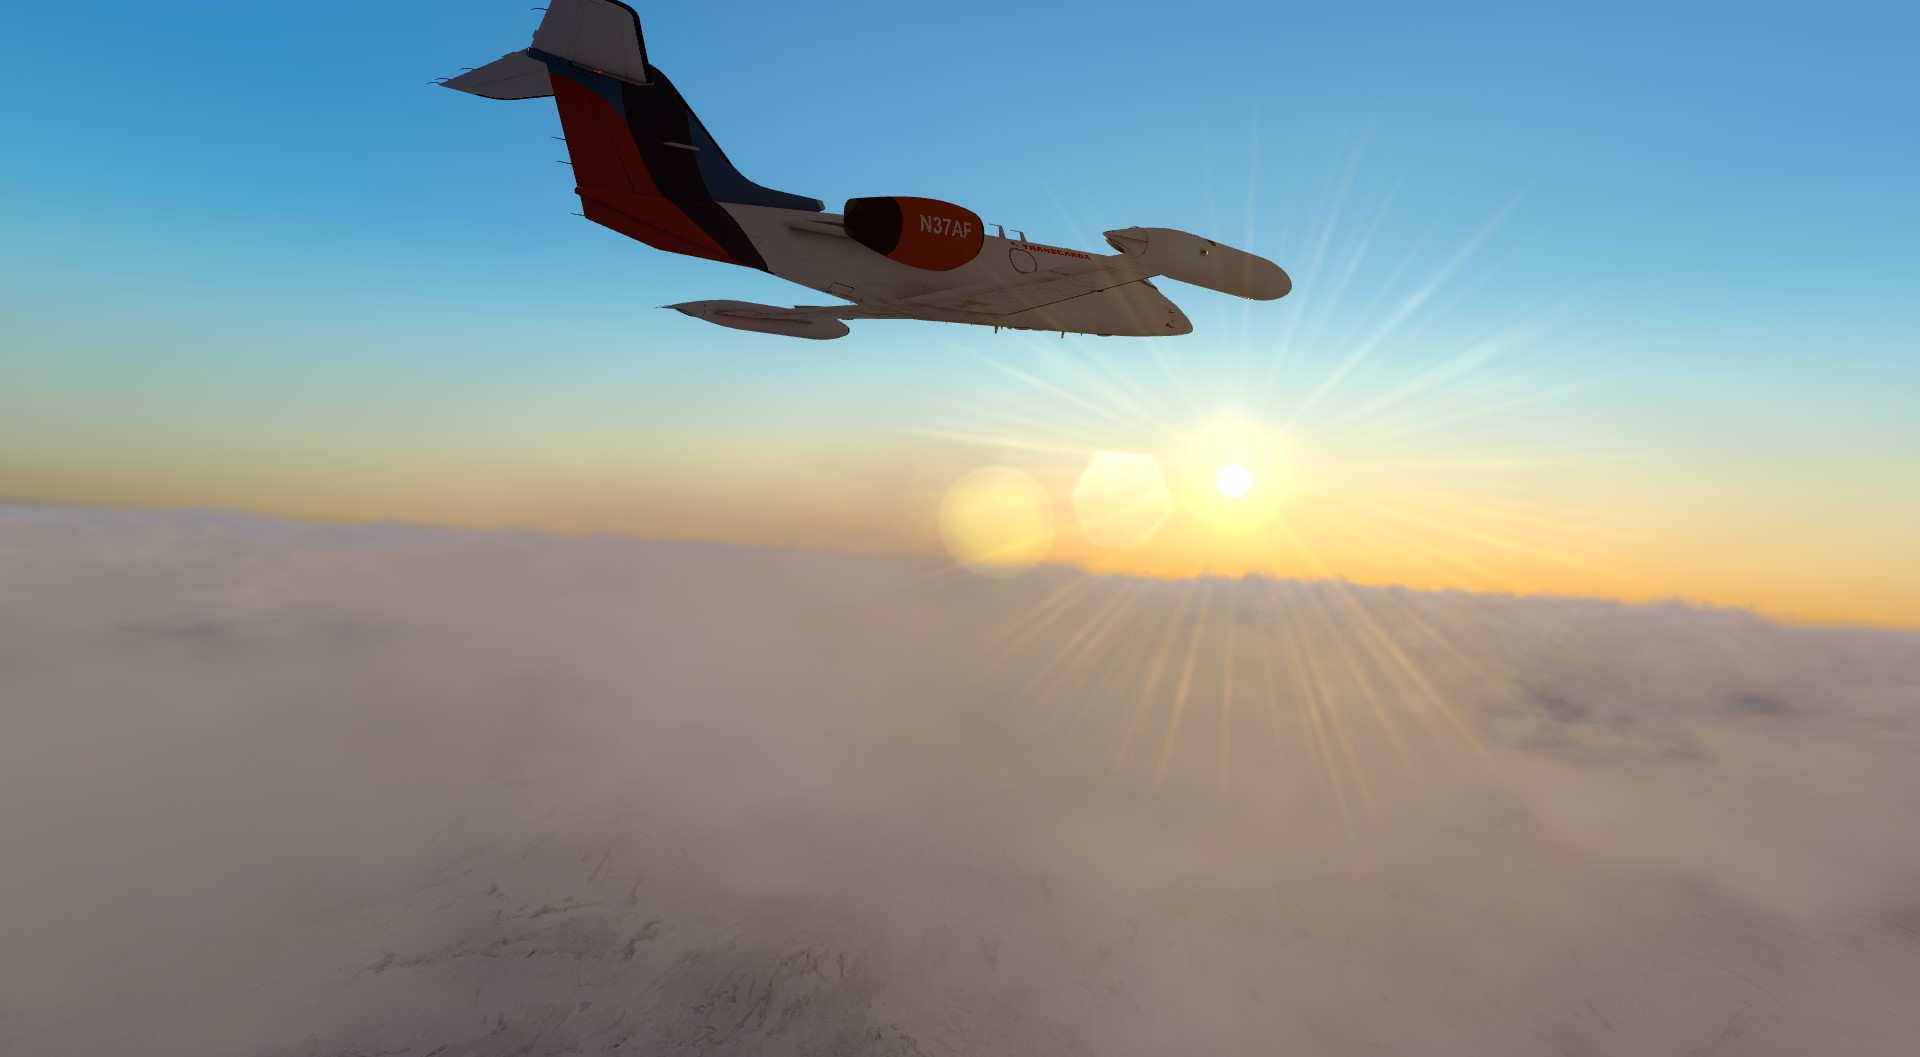 Flysimware – Learjet 35A 评测与冰岛送货之旅-5408 